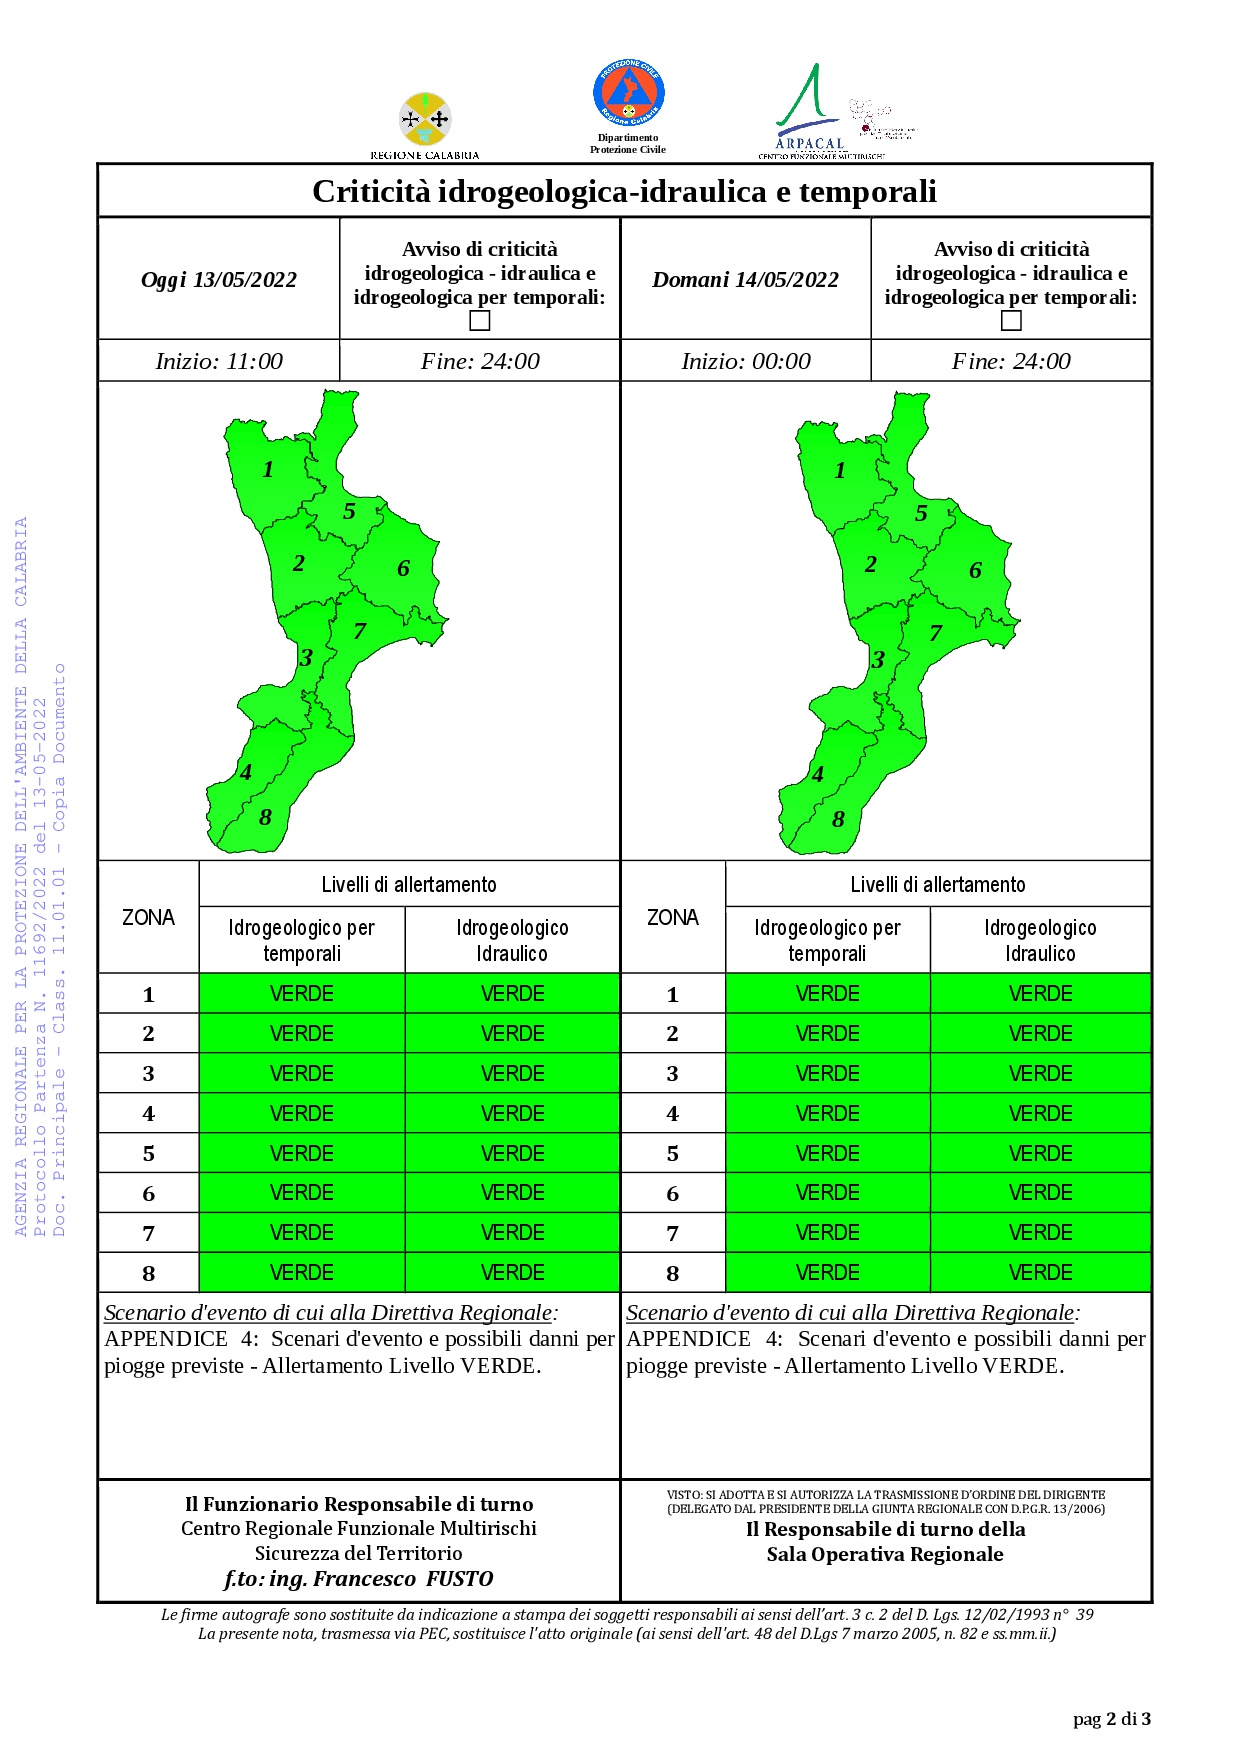 Criticità idrogeologica-idraulica e temporali in Calabria 13-05-2022